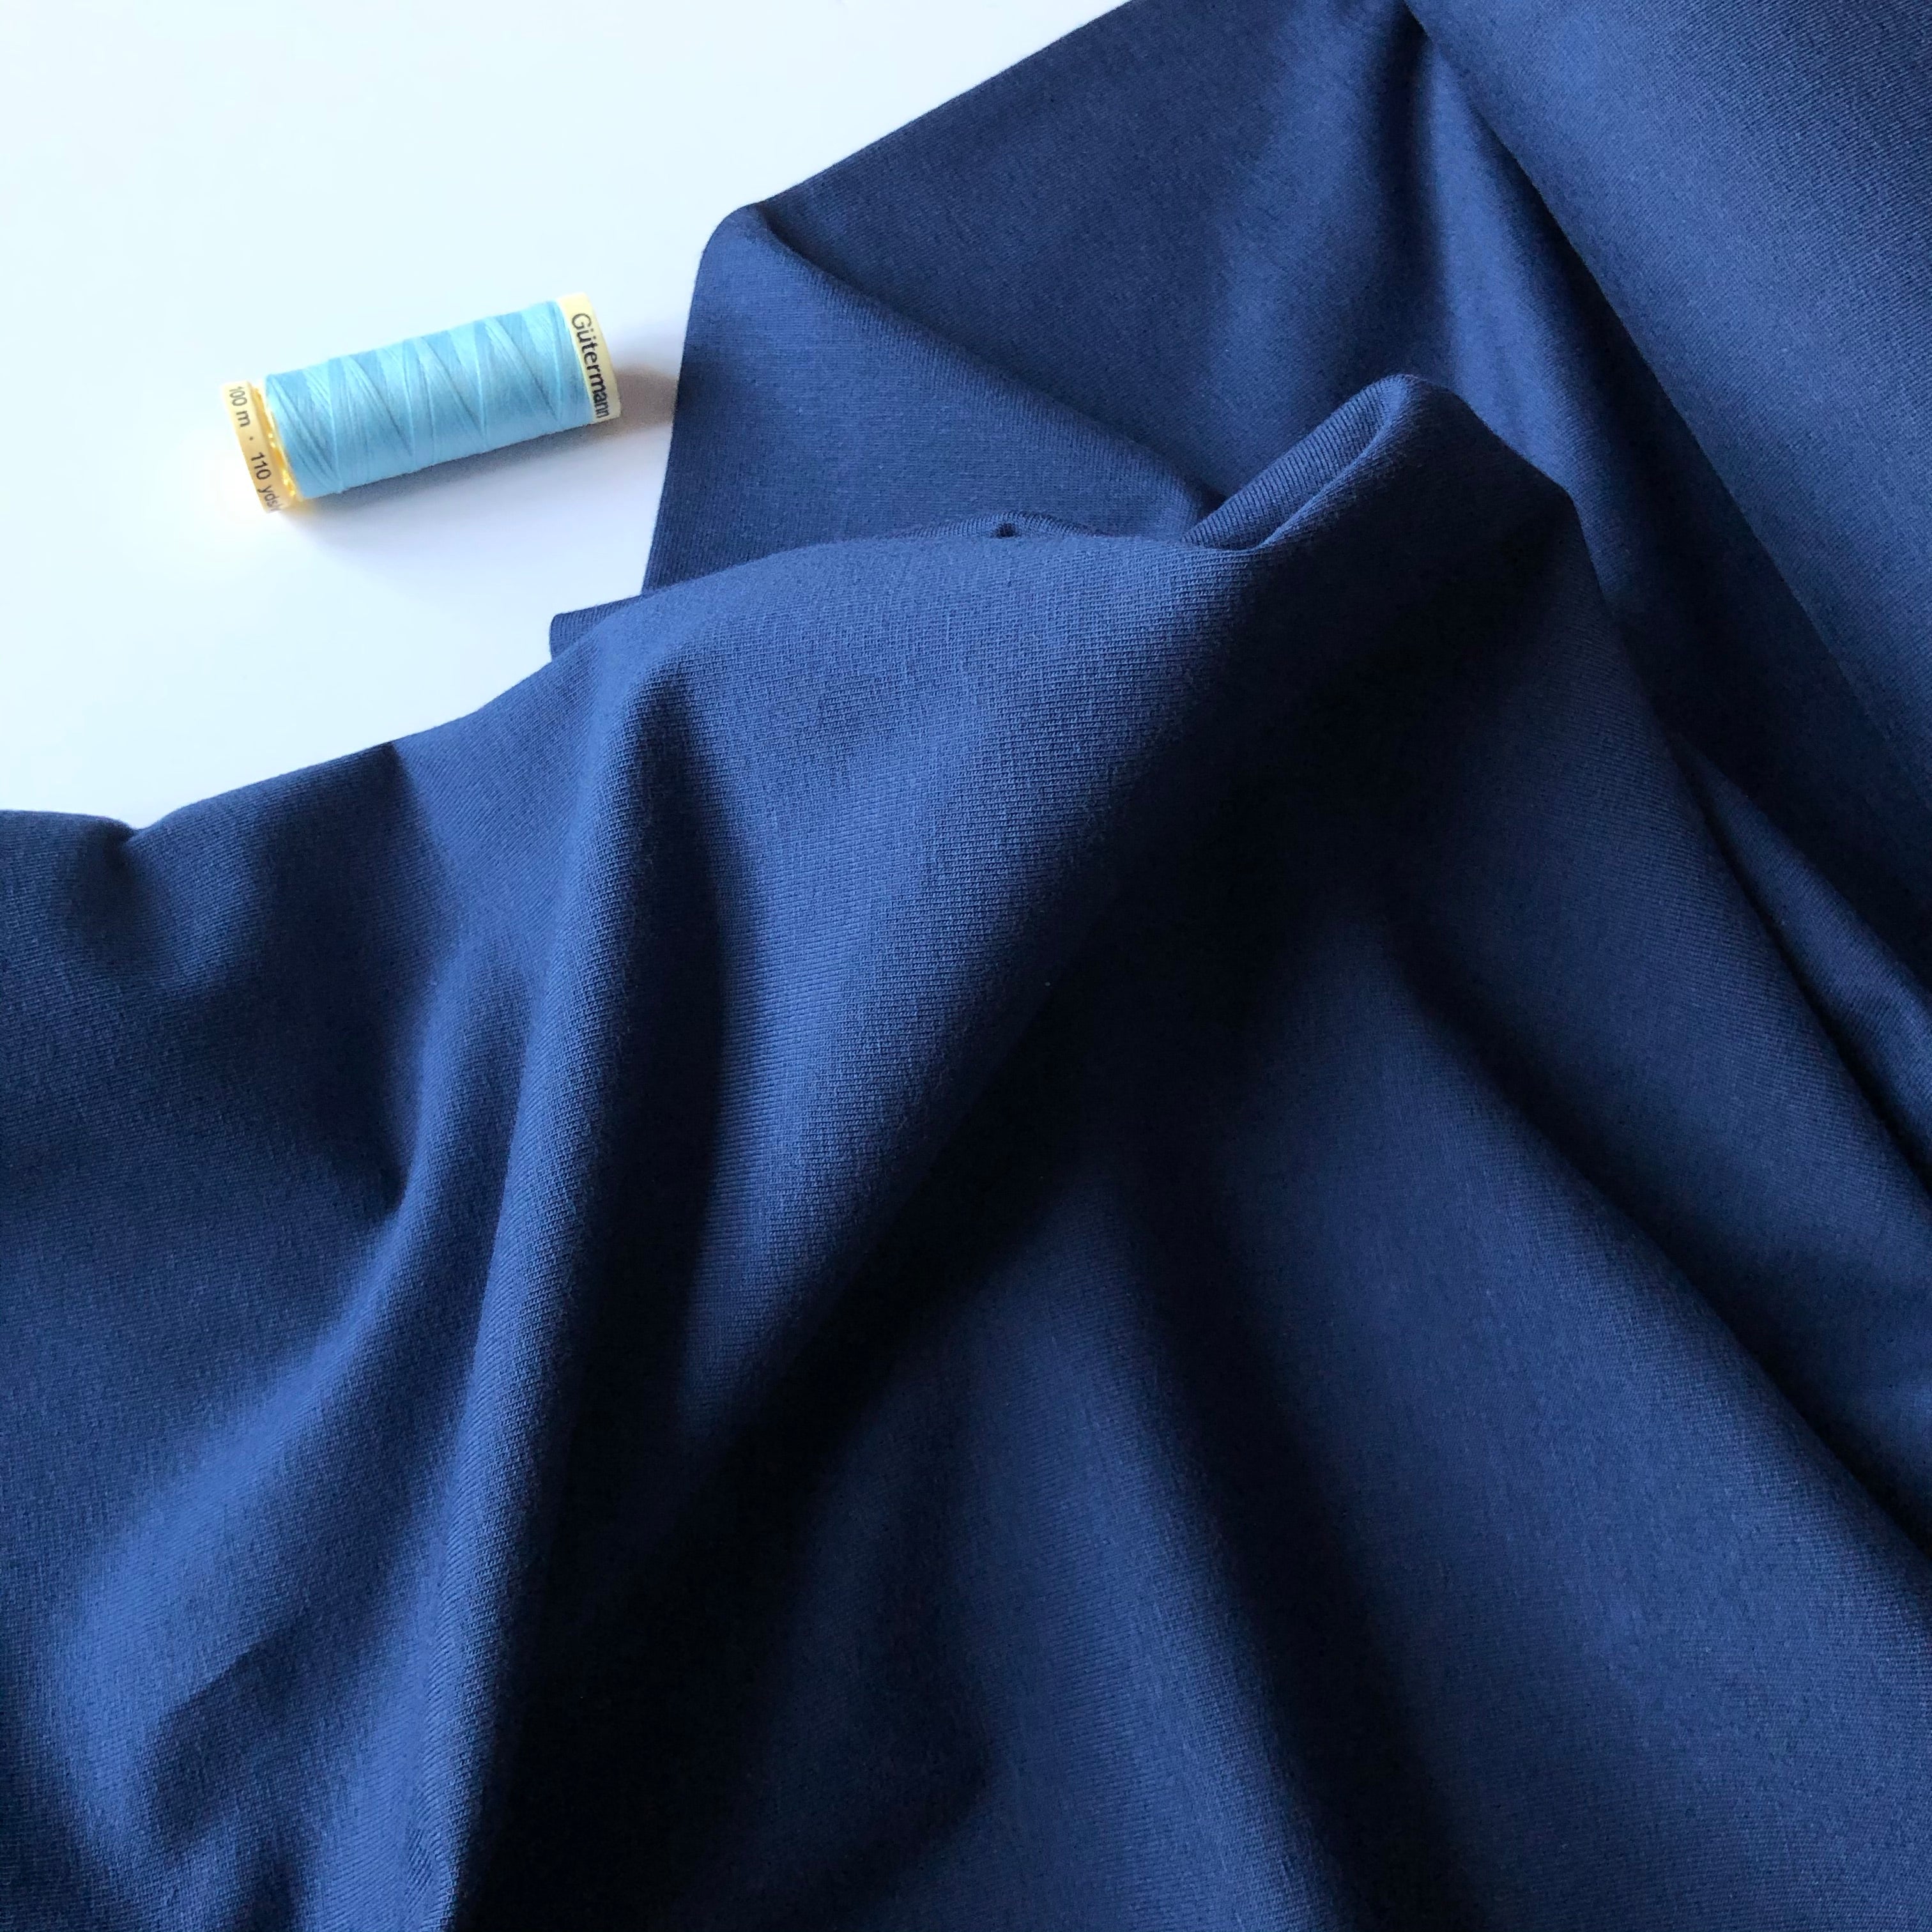 Essential Chic Navy Blue Plain Cotton Jersey Fabric